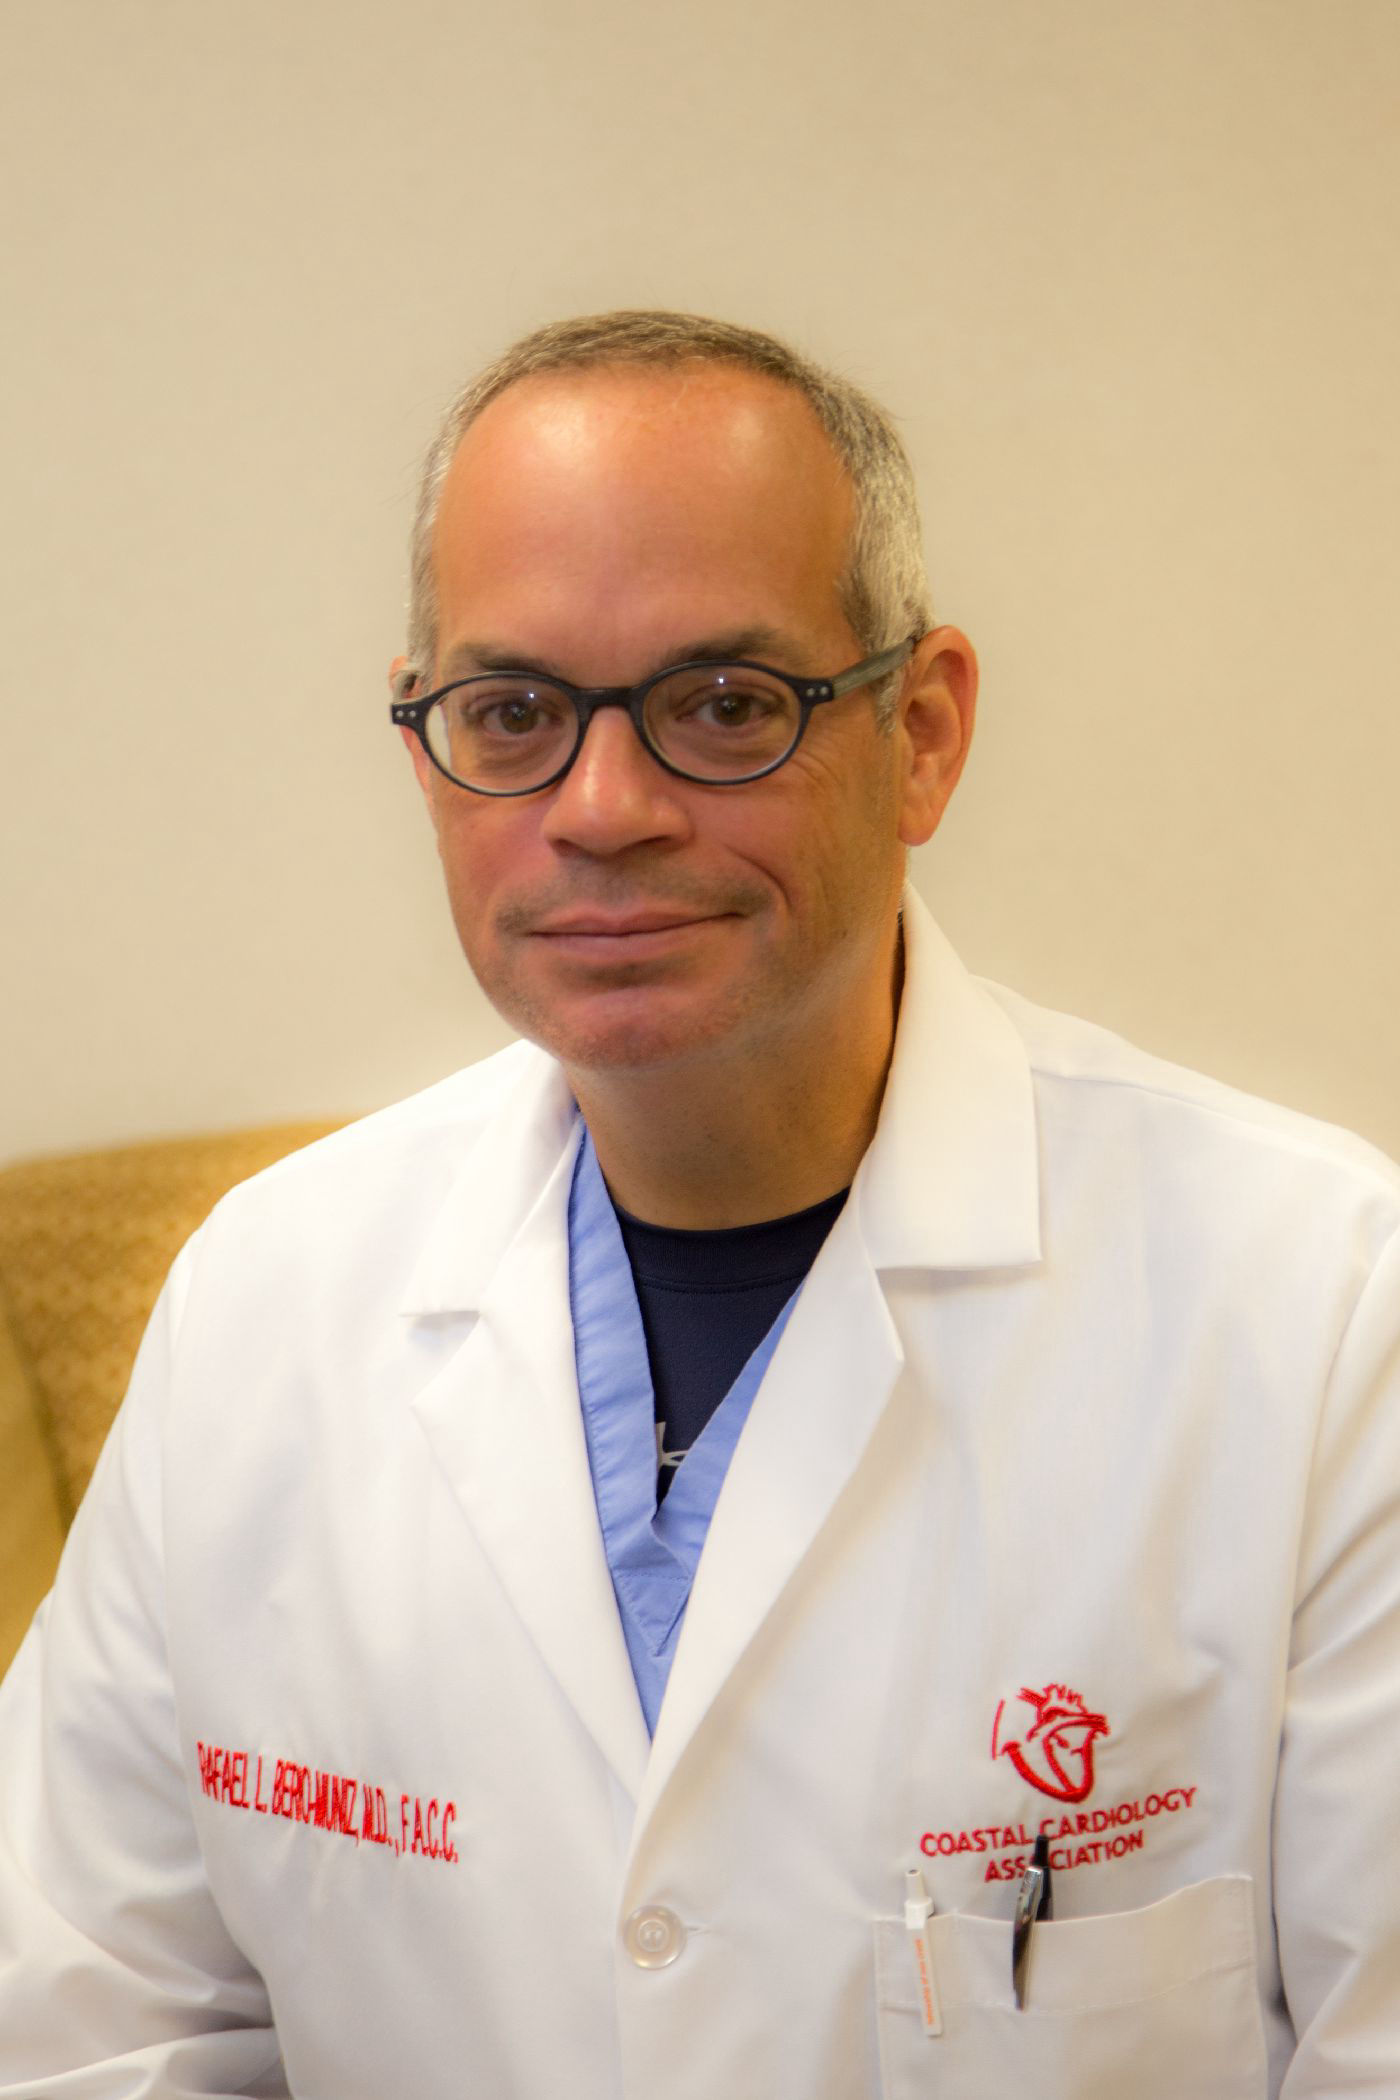 Dr. Berio-Muñiz - Cardiologist at Coastal Cardiology Association